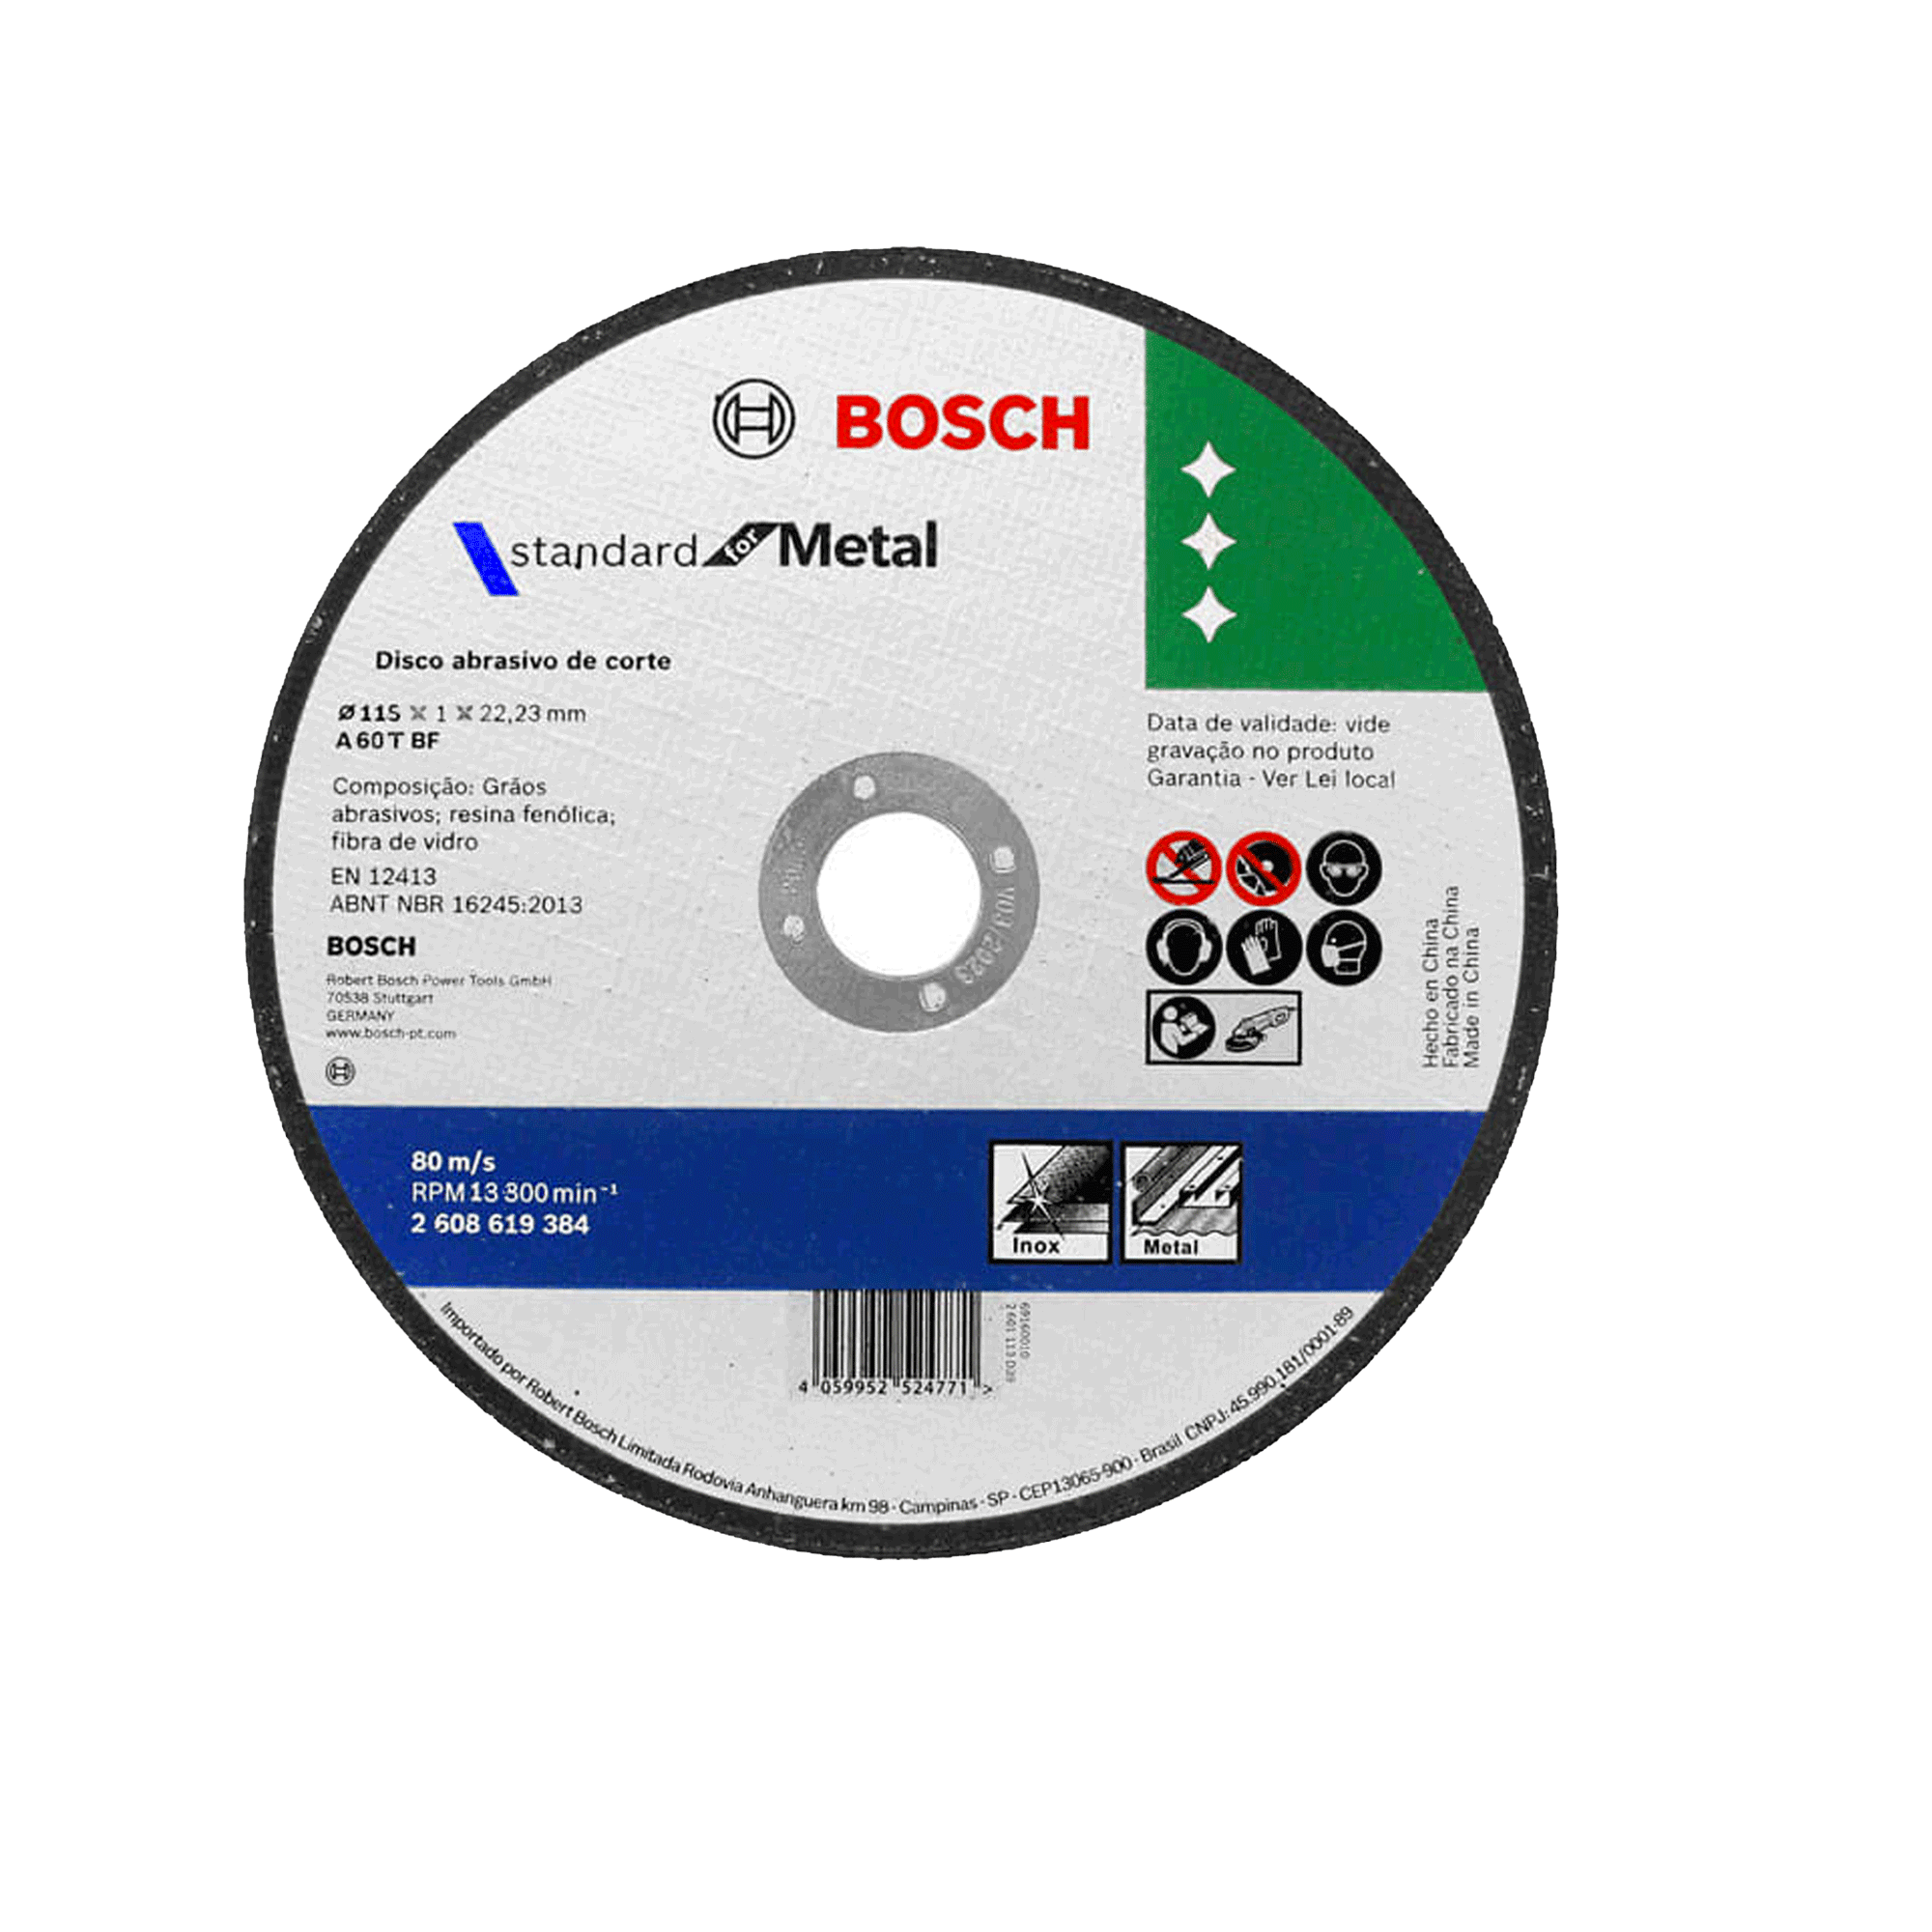 Combo Esmeriladora Black and Decker G720 820 W | Discos de Corte Bosch 4 1/2